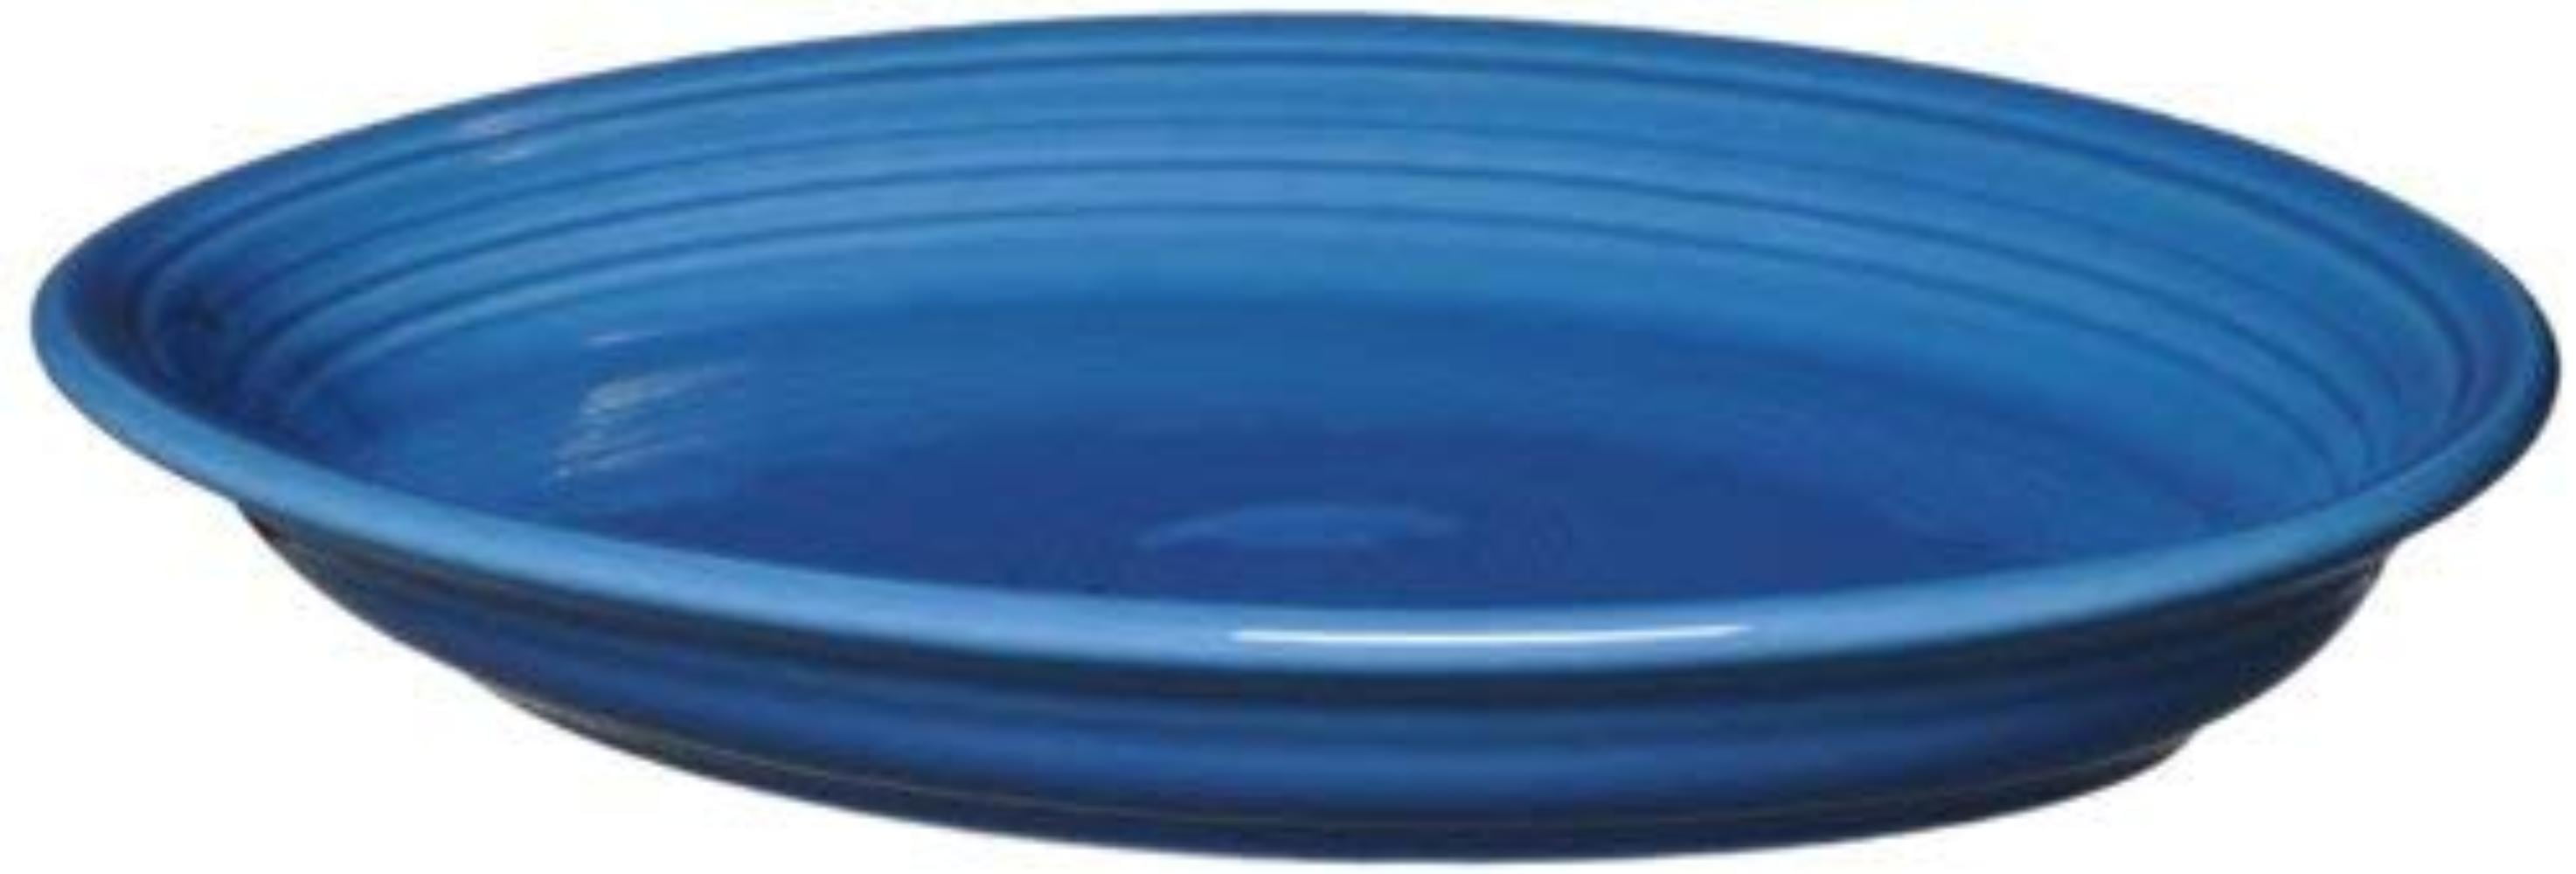 Fiestaware Lapis Medium Platter Fiesta Blue 11.5 inch Serving Platter 